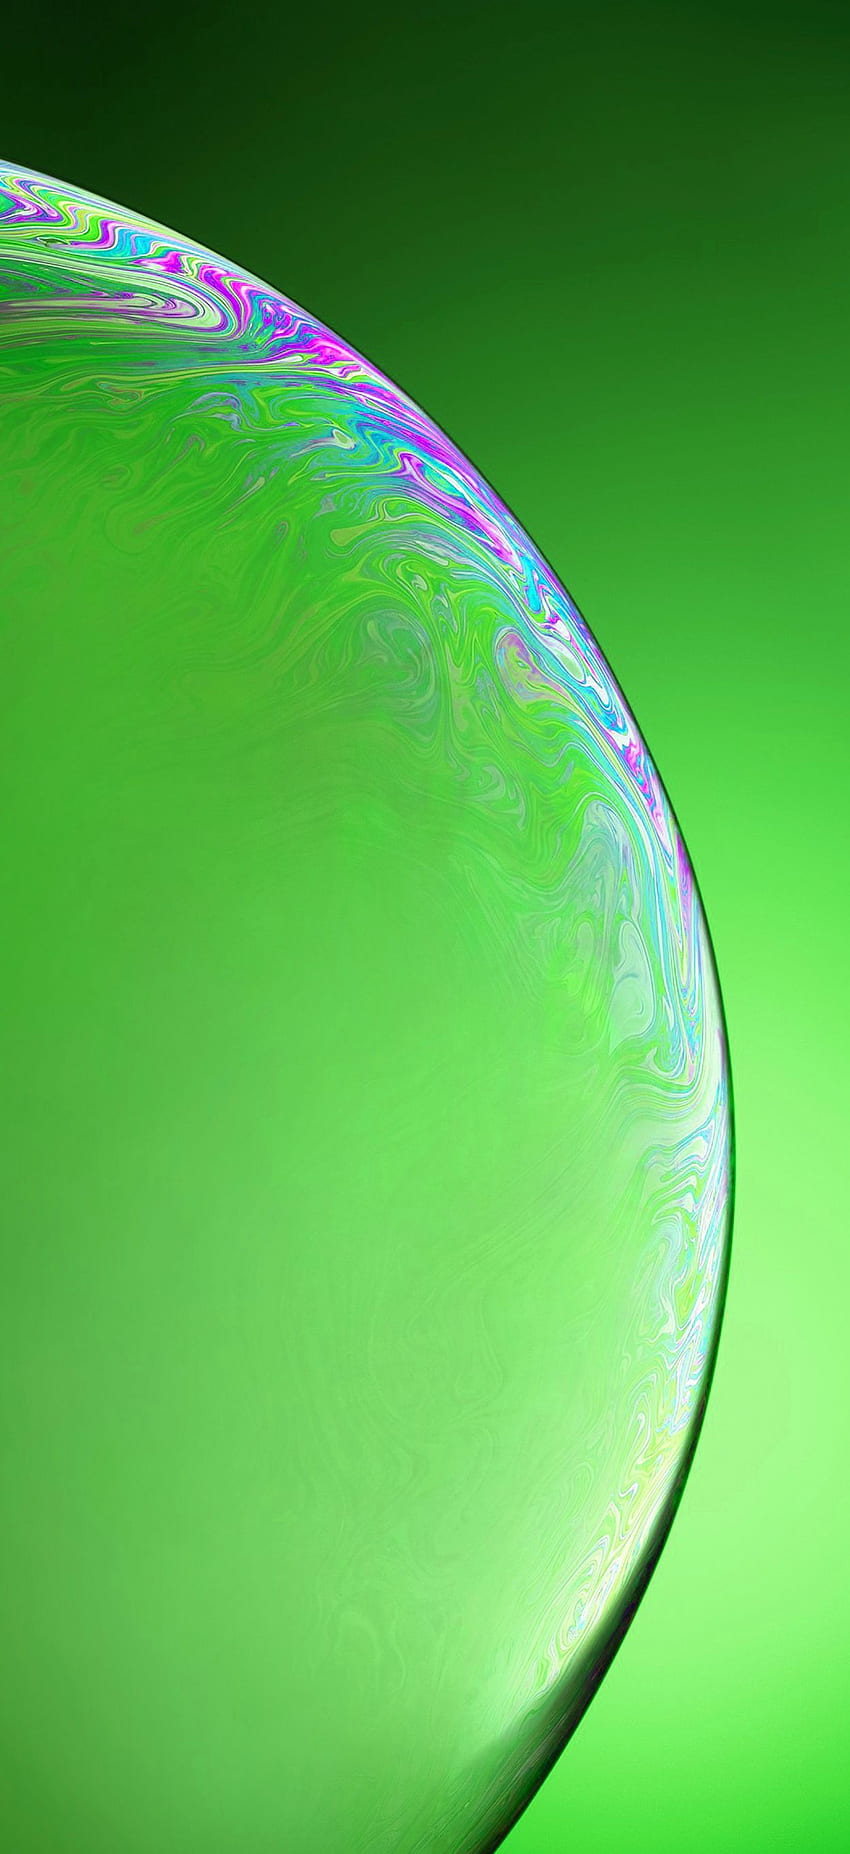 iPhone XR - Bonus 2 - The Missing Color (Green) - HD phone wallpaper